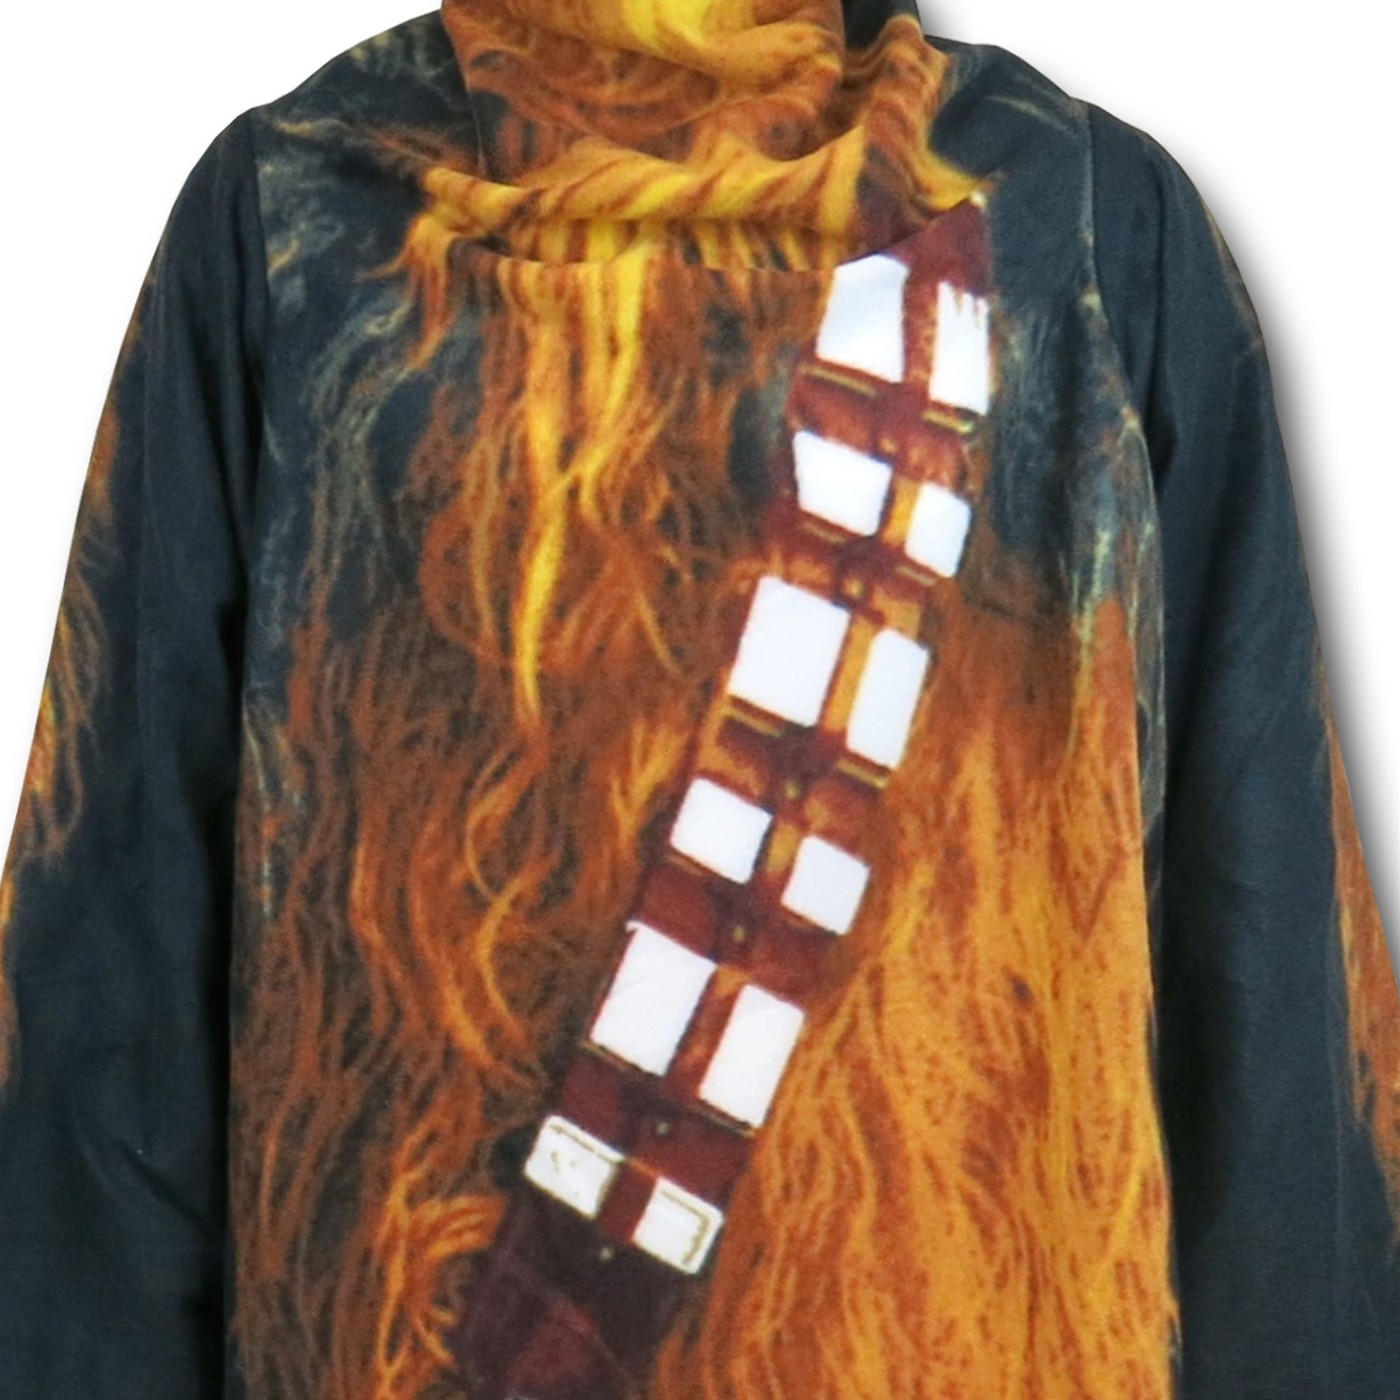 Star Wars Chewbacca Costume Snuggy Sleeved Blanket